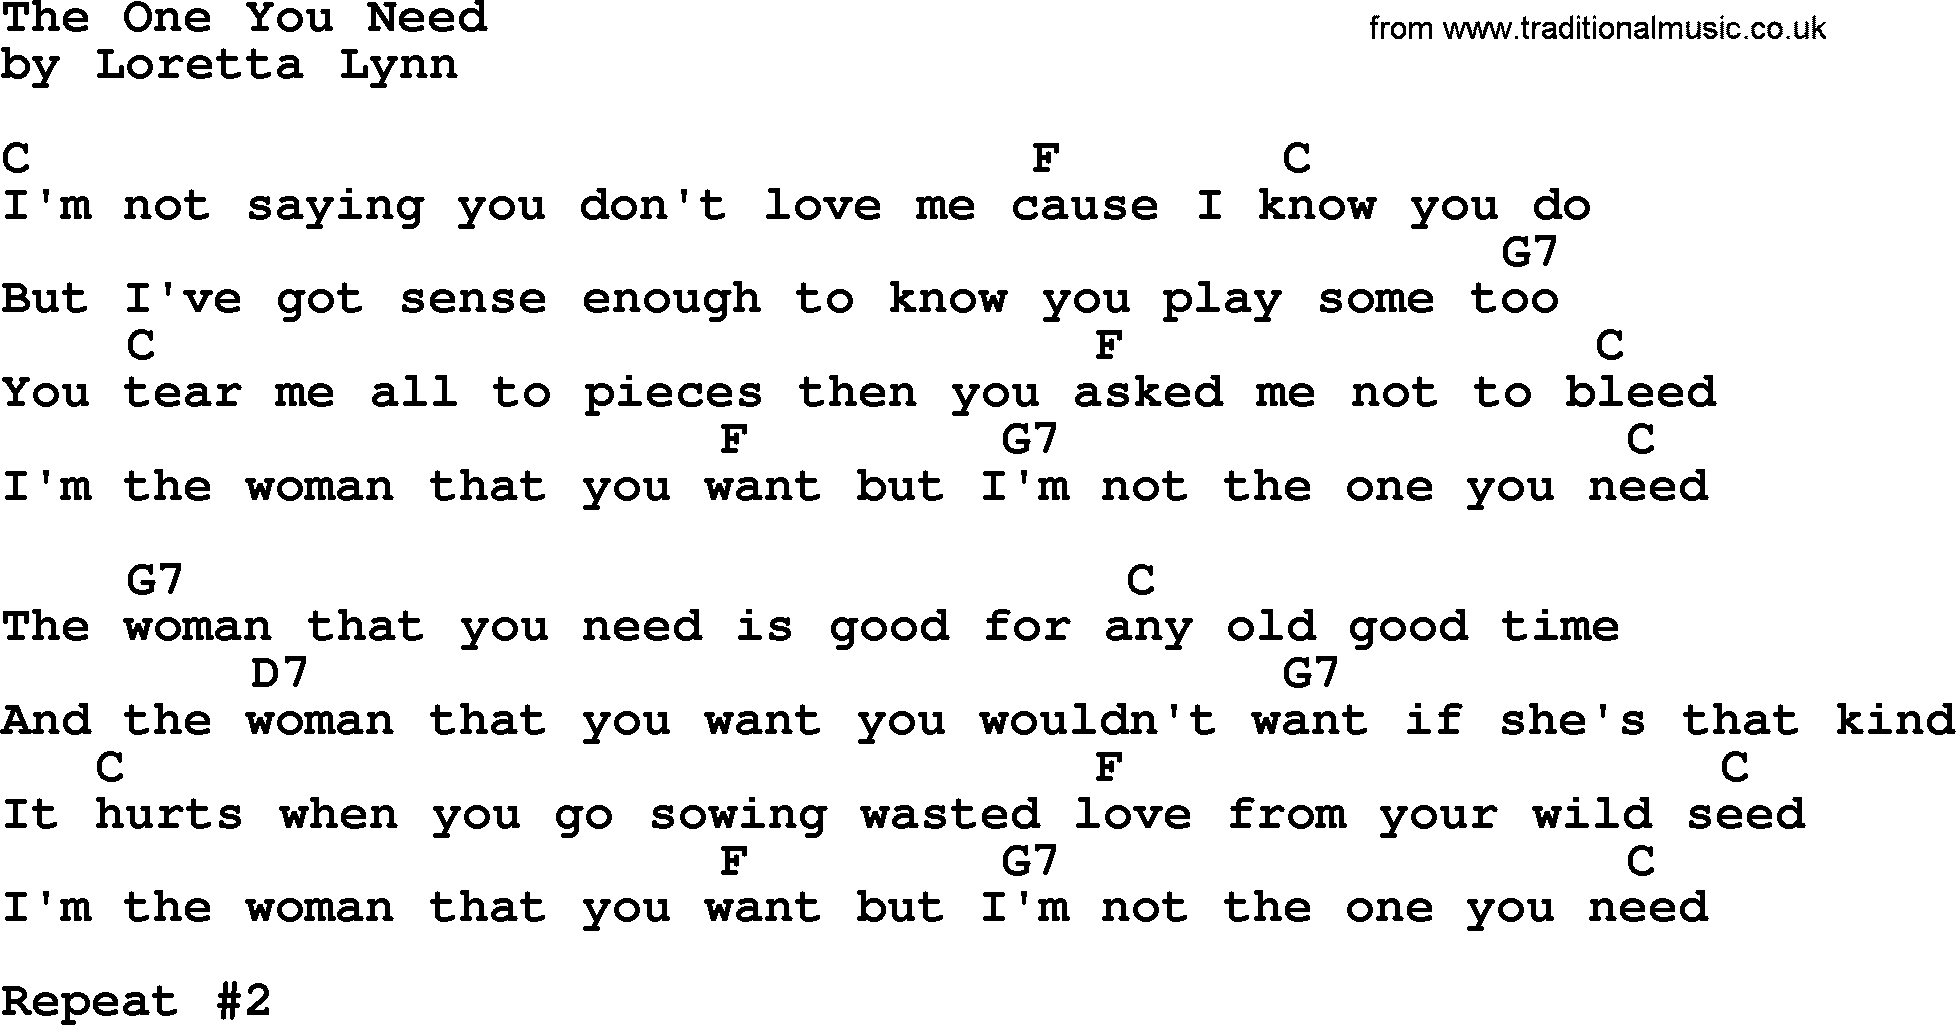 Loretta Lynn song: The One You Need lyrics and chords